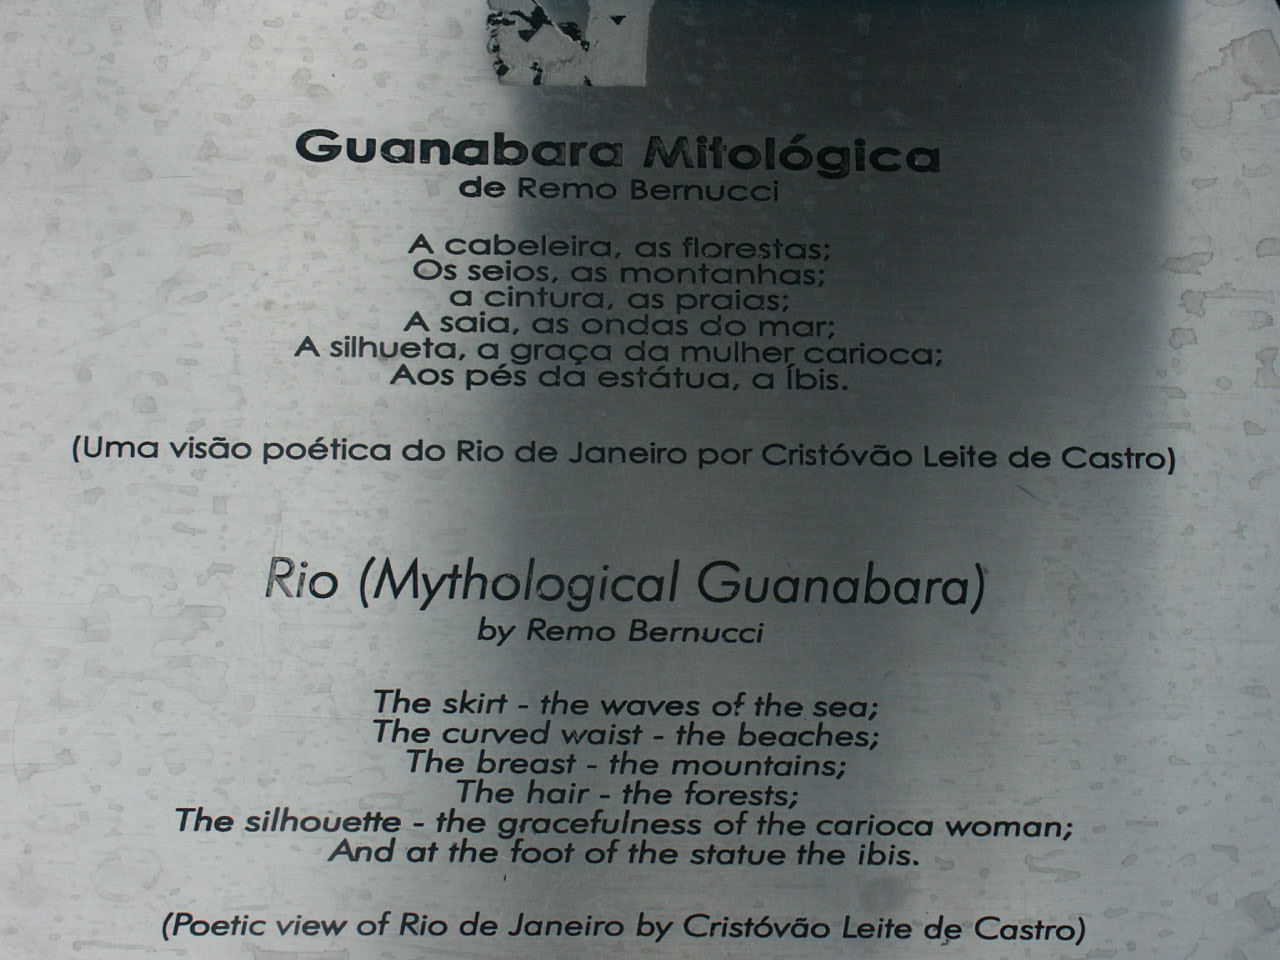 Guanabara mitológica